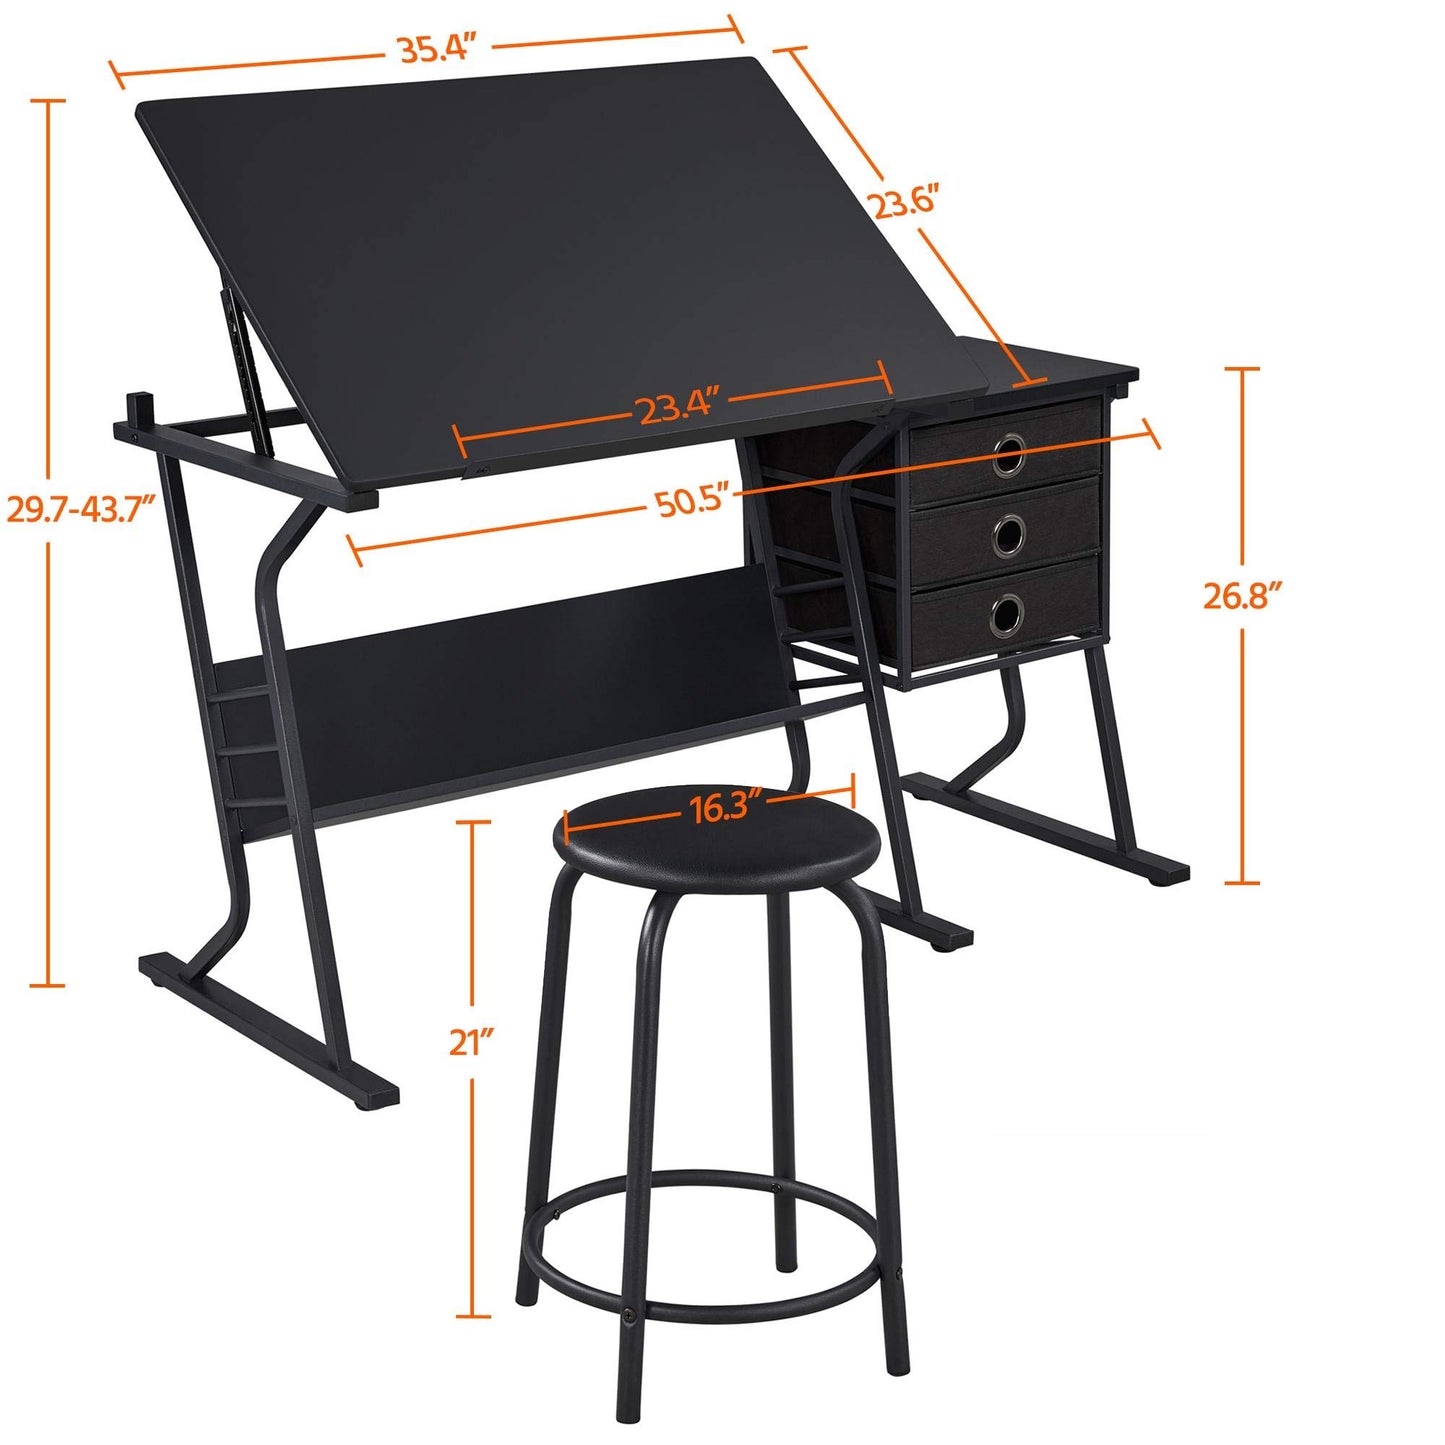 Topeakmart Height Adjustable Drafting Table Art Craft Desk Work Station Hobby Design Studio Tiltable Tabletop Drawing Desk with Stool & Storage